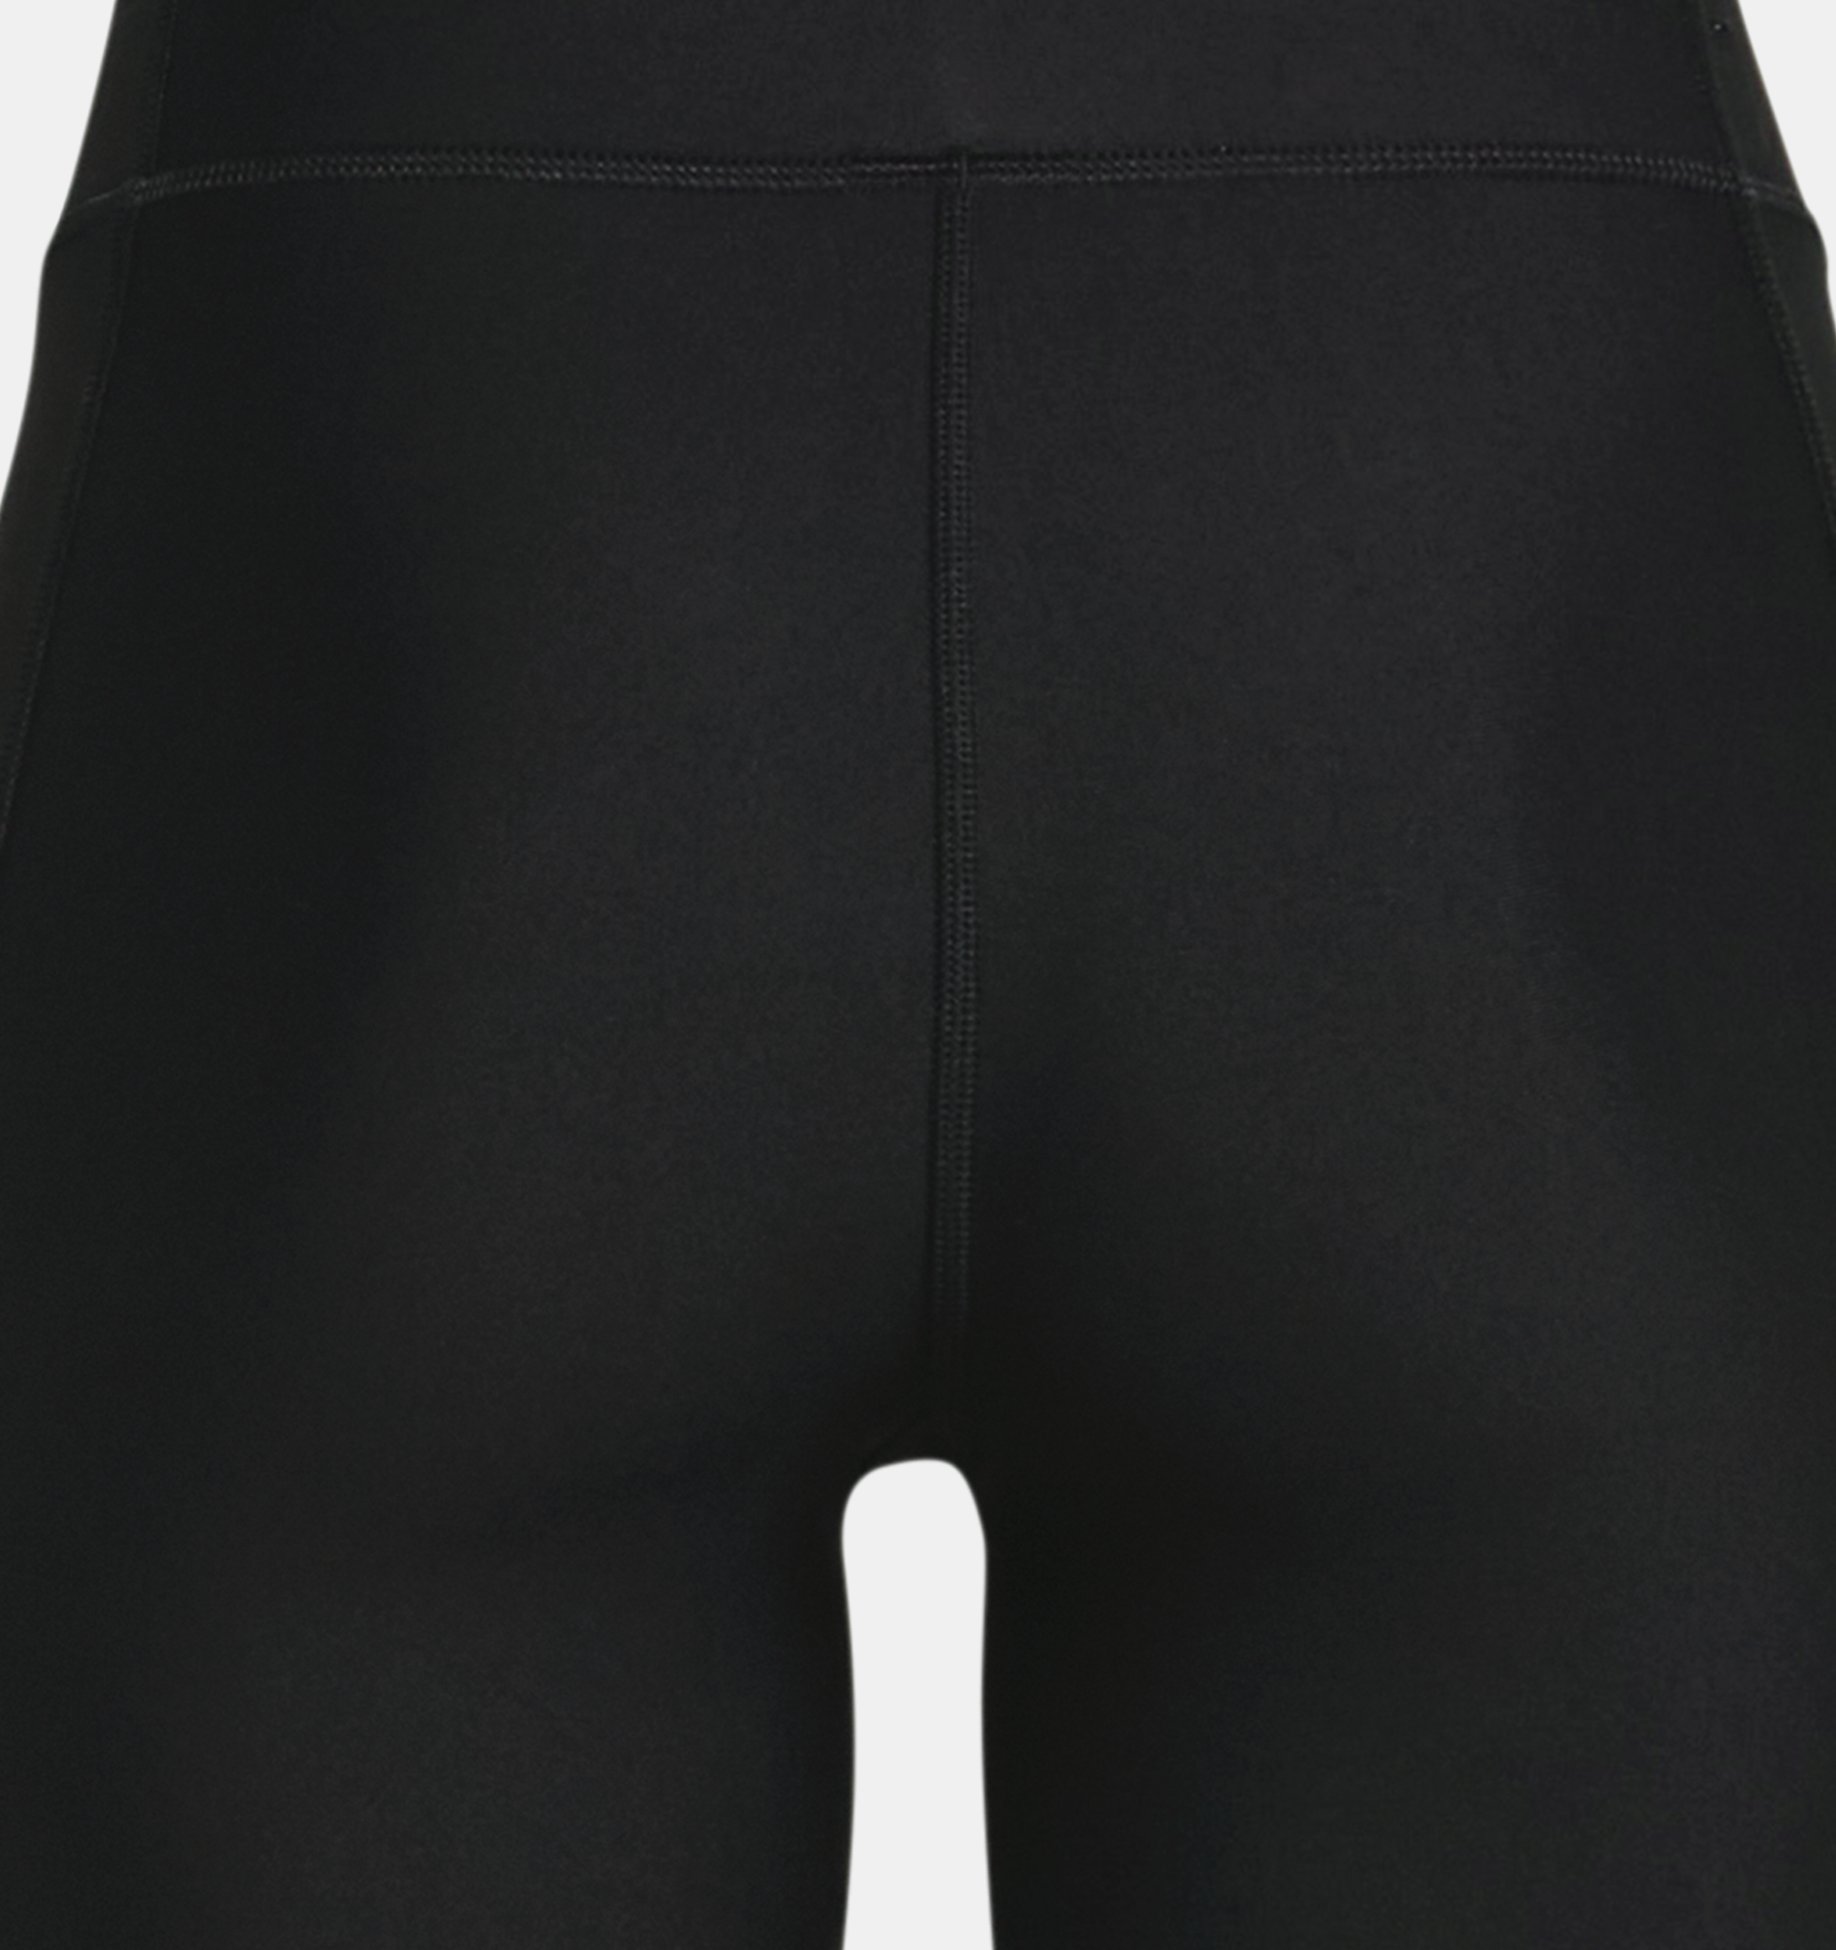 Women's HeatGear® Long Shorts